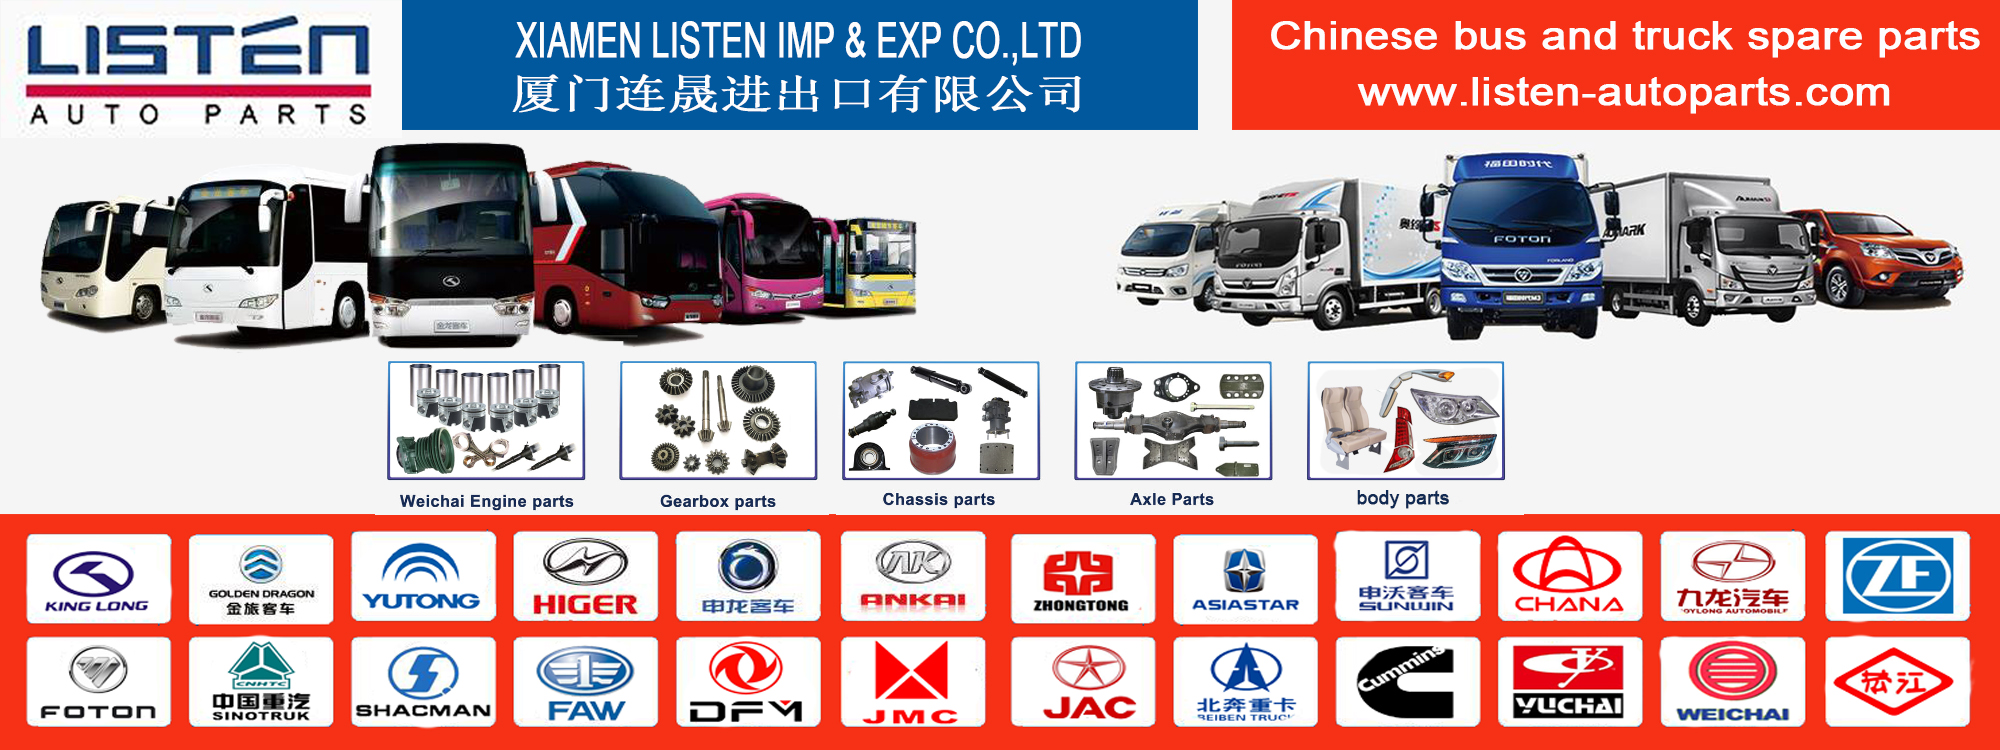 Hạ Môn Nghe Imp & Exp Co., Ltd